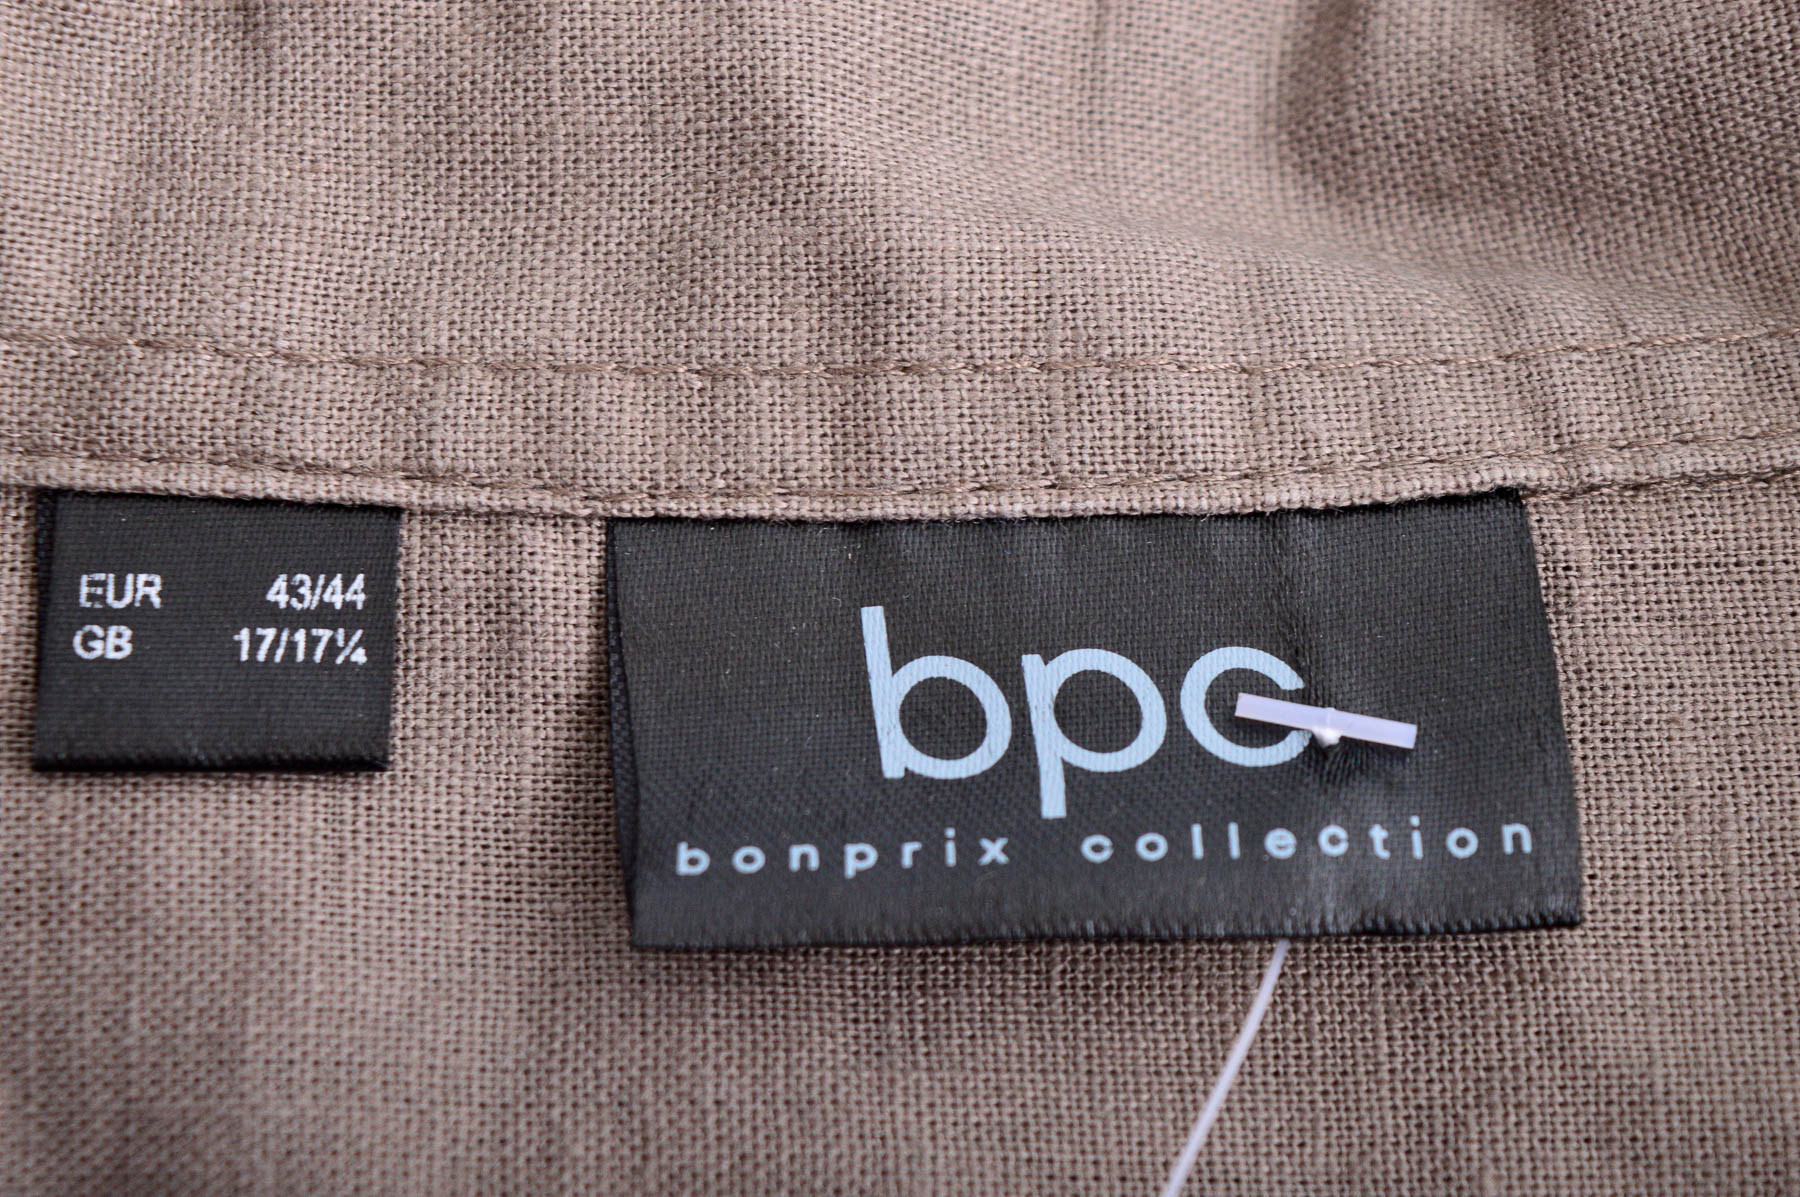 Men's shirt - Bpc Bonprix Collection - 2